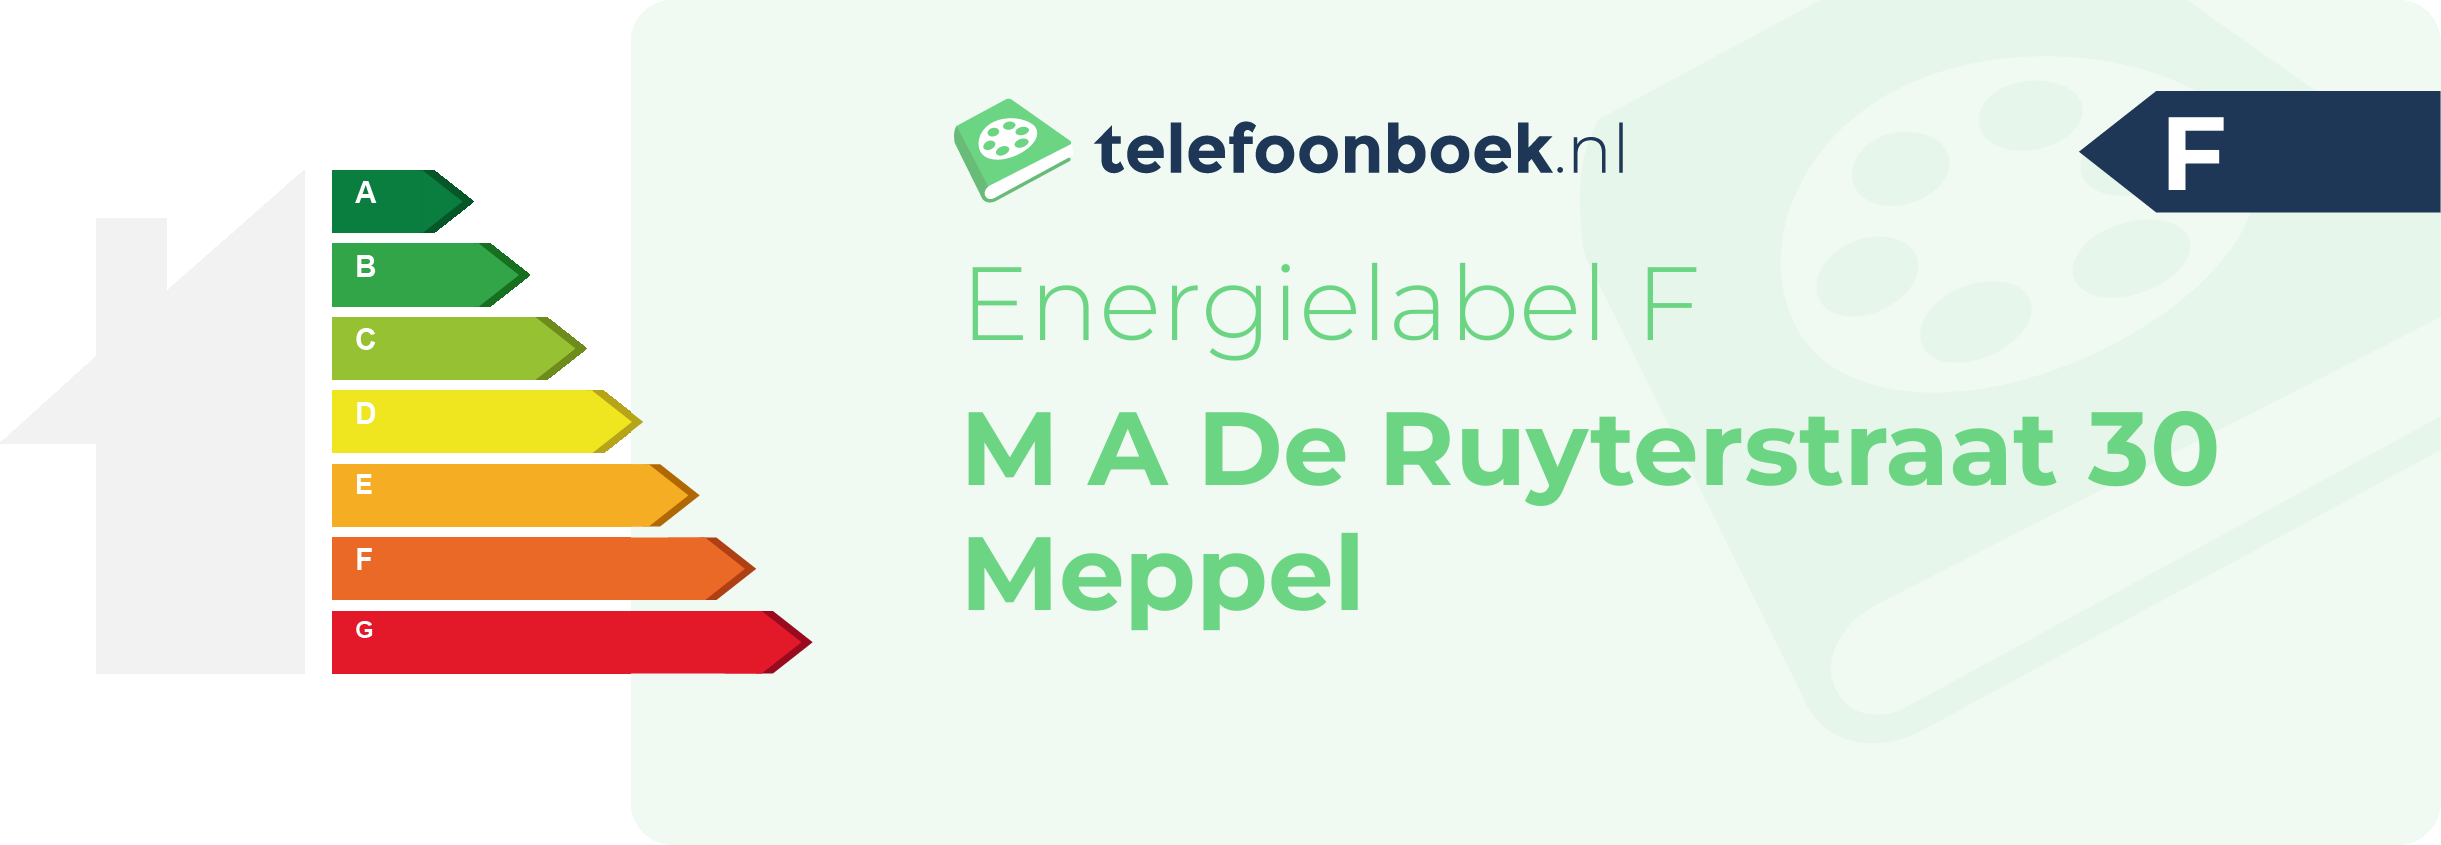 Energielabel M A De Ruyterstraat 30 Meppel